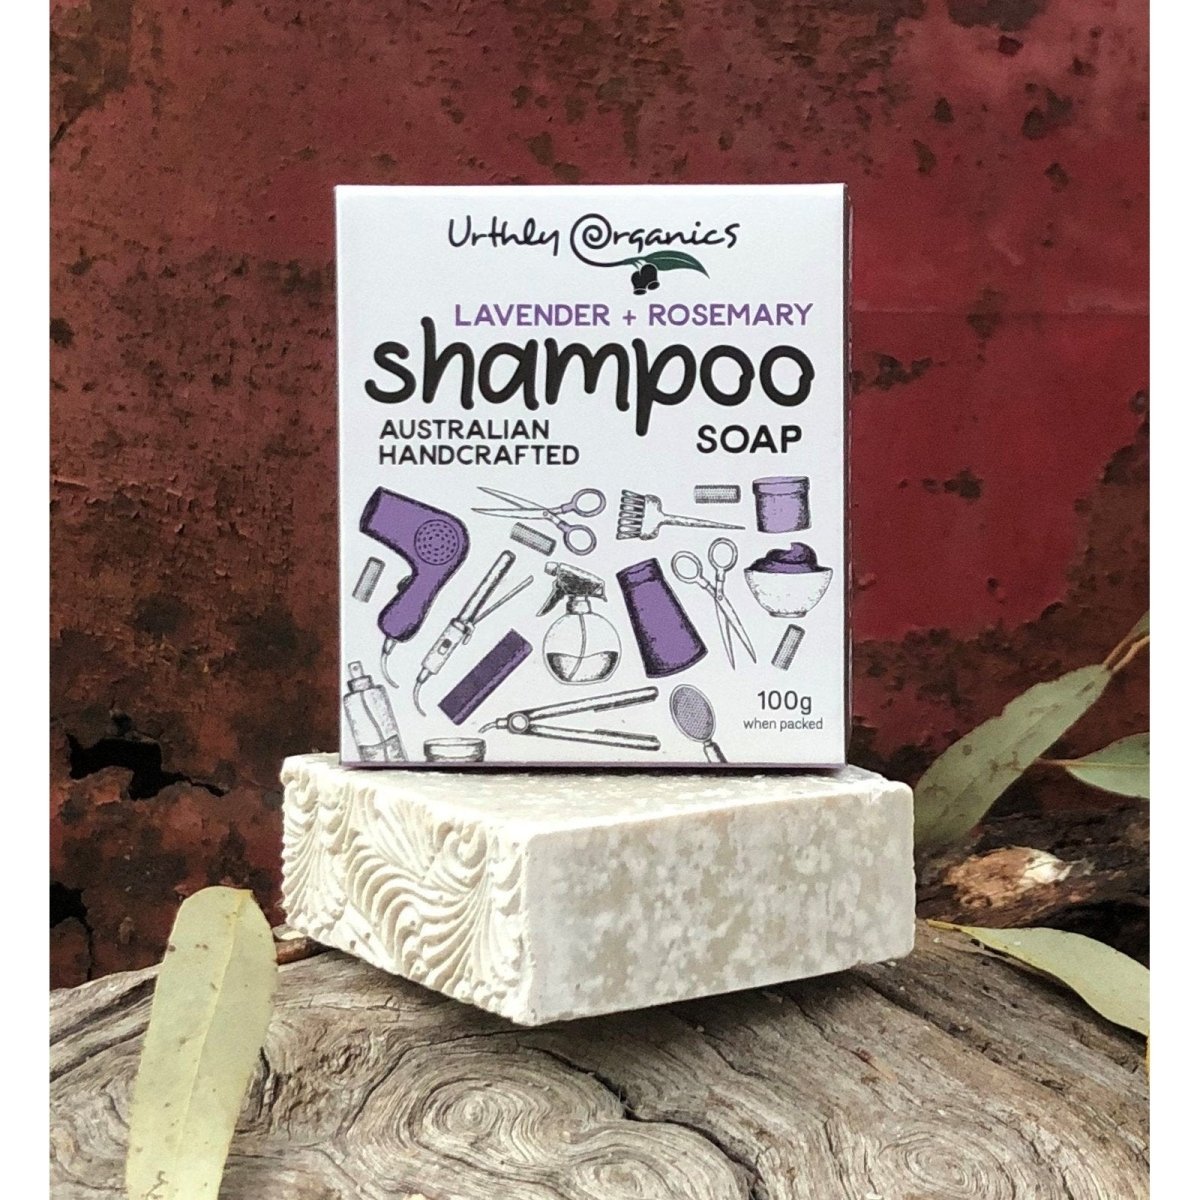 Urthly Organics handcrafted Lavender + Rosemary Shampoo Soap Bar, 100g